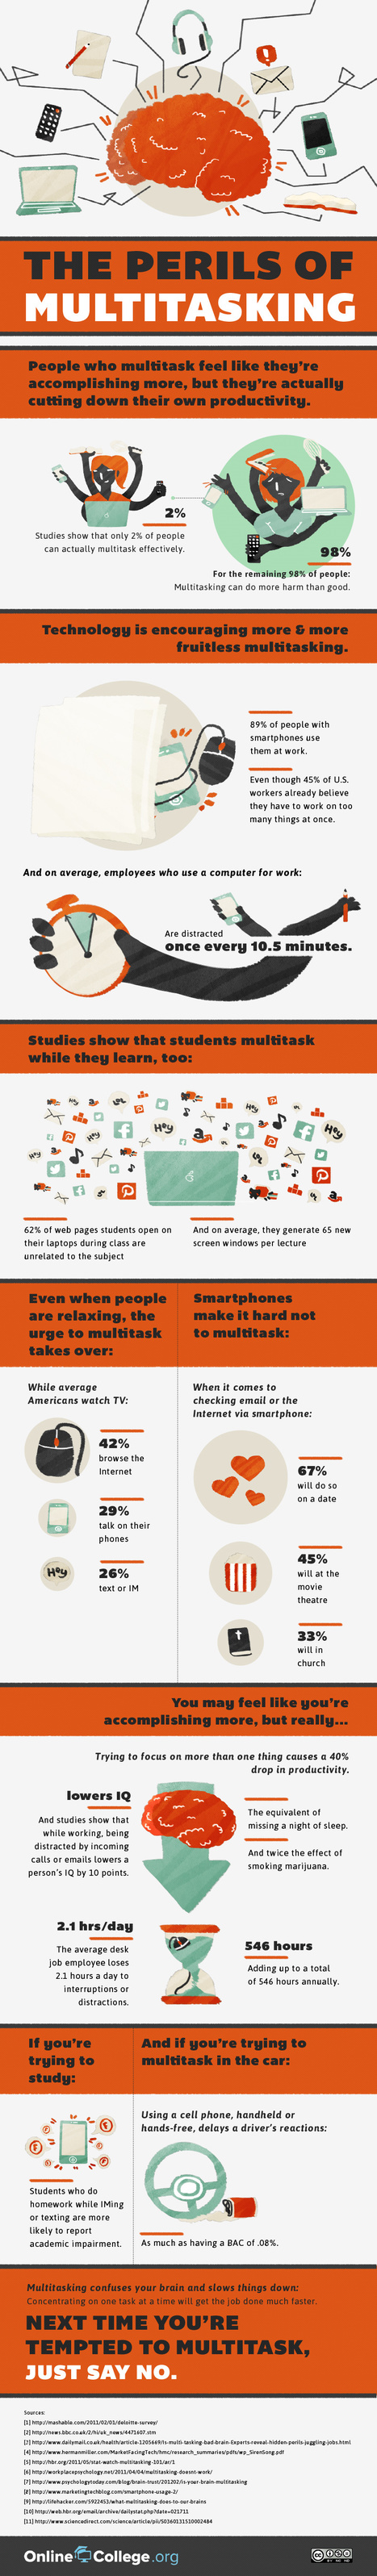 Multitasking - An Infographic | Digital Delights - Digital Tribes | Scoop.it